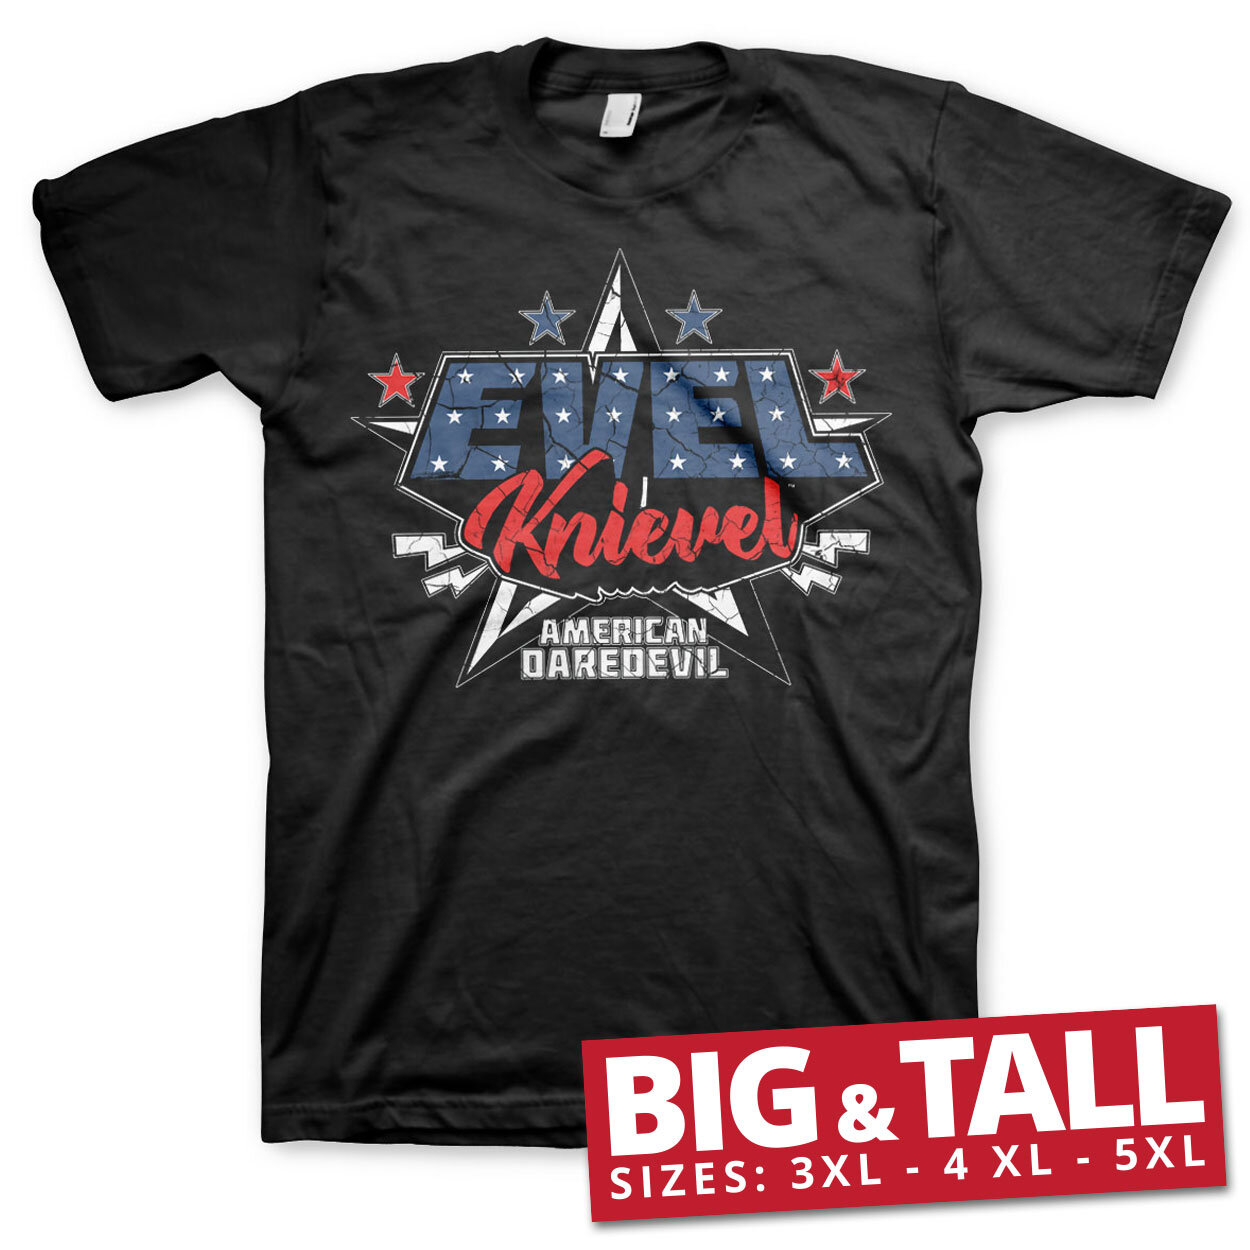 Evel Knievel - American Daredevil Big & Tall T-Shirt